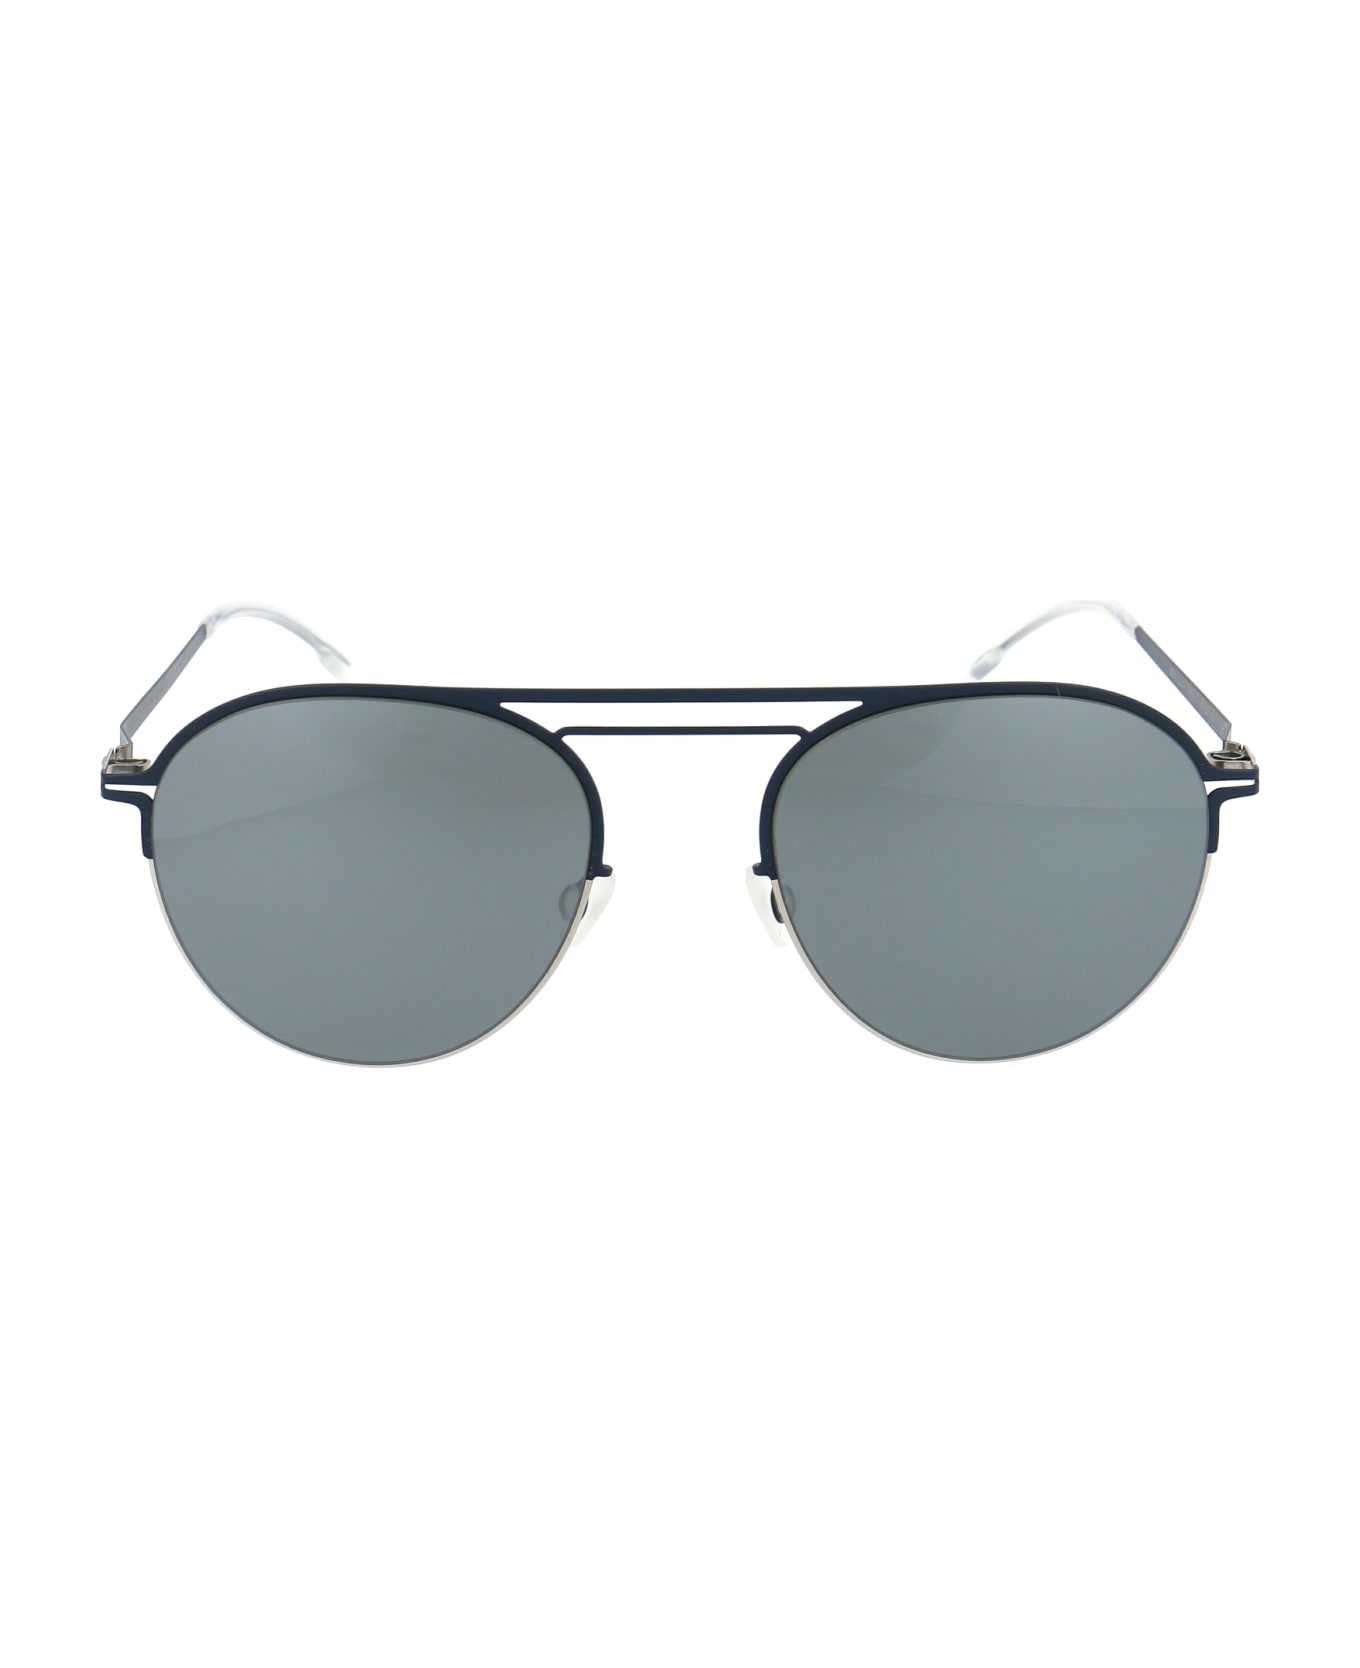 Mykita Duane Sunglasses - 091 Silver/Navy Light Silver Flash